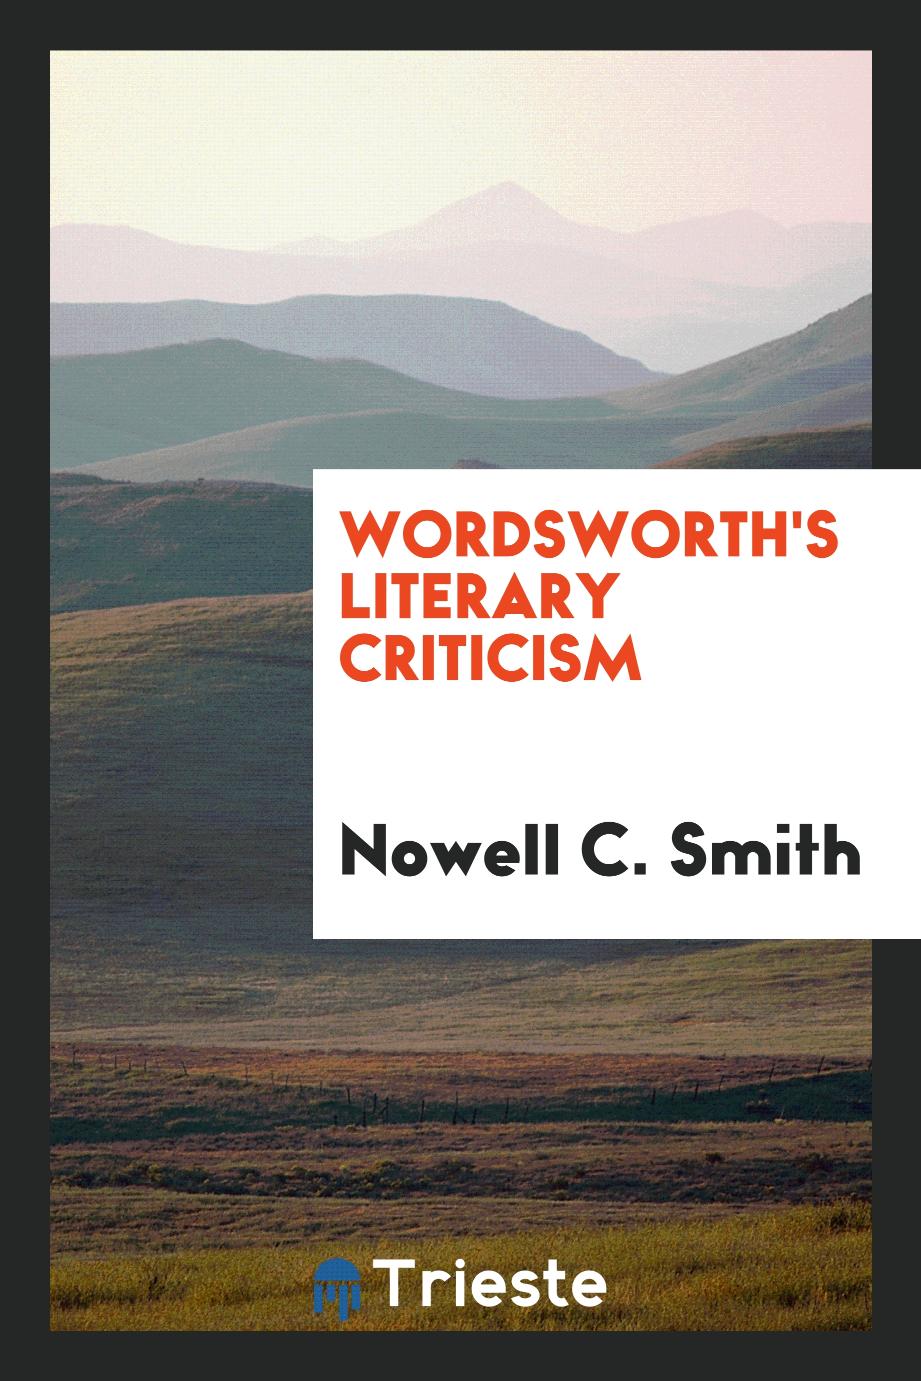 Wordsworth's literary criticism